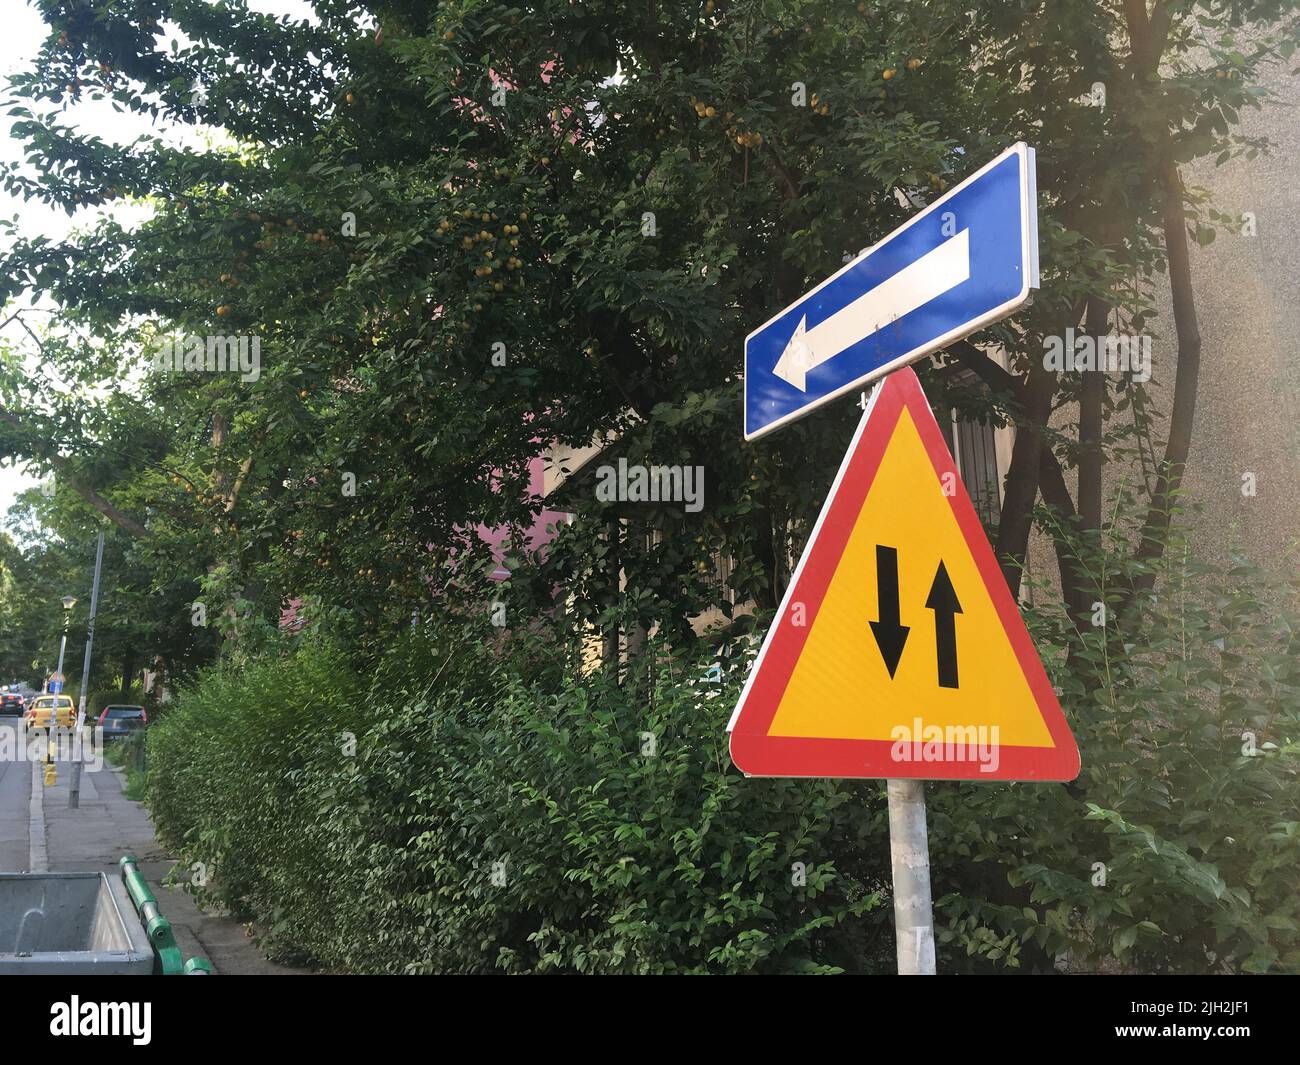 Atención de dos vías de tráfico fotografías e imágenes de alta resolución -  Alamy